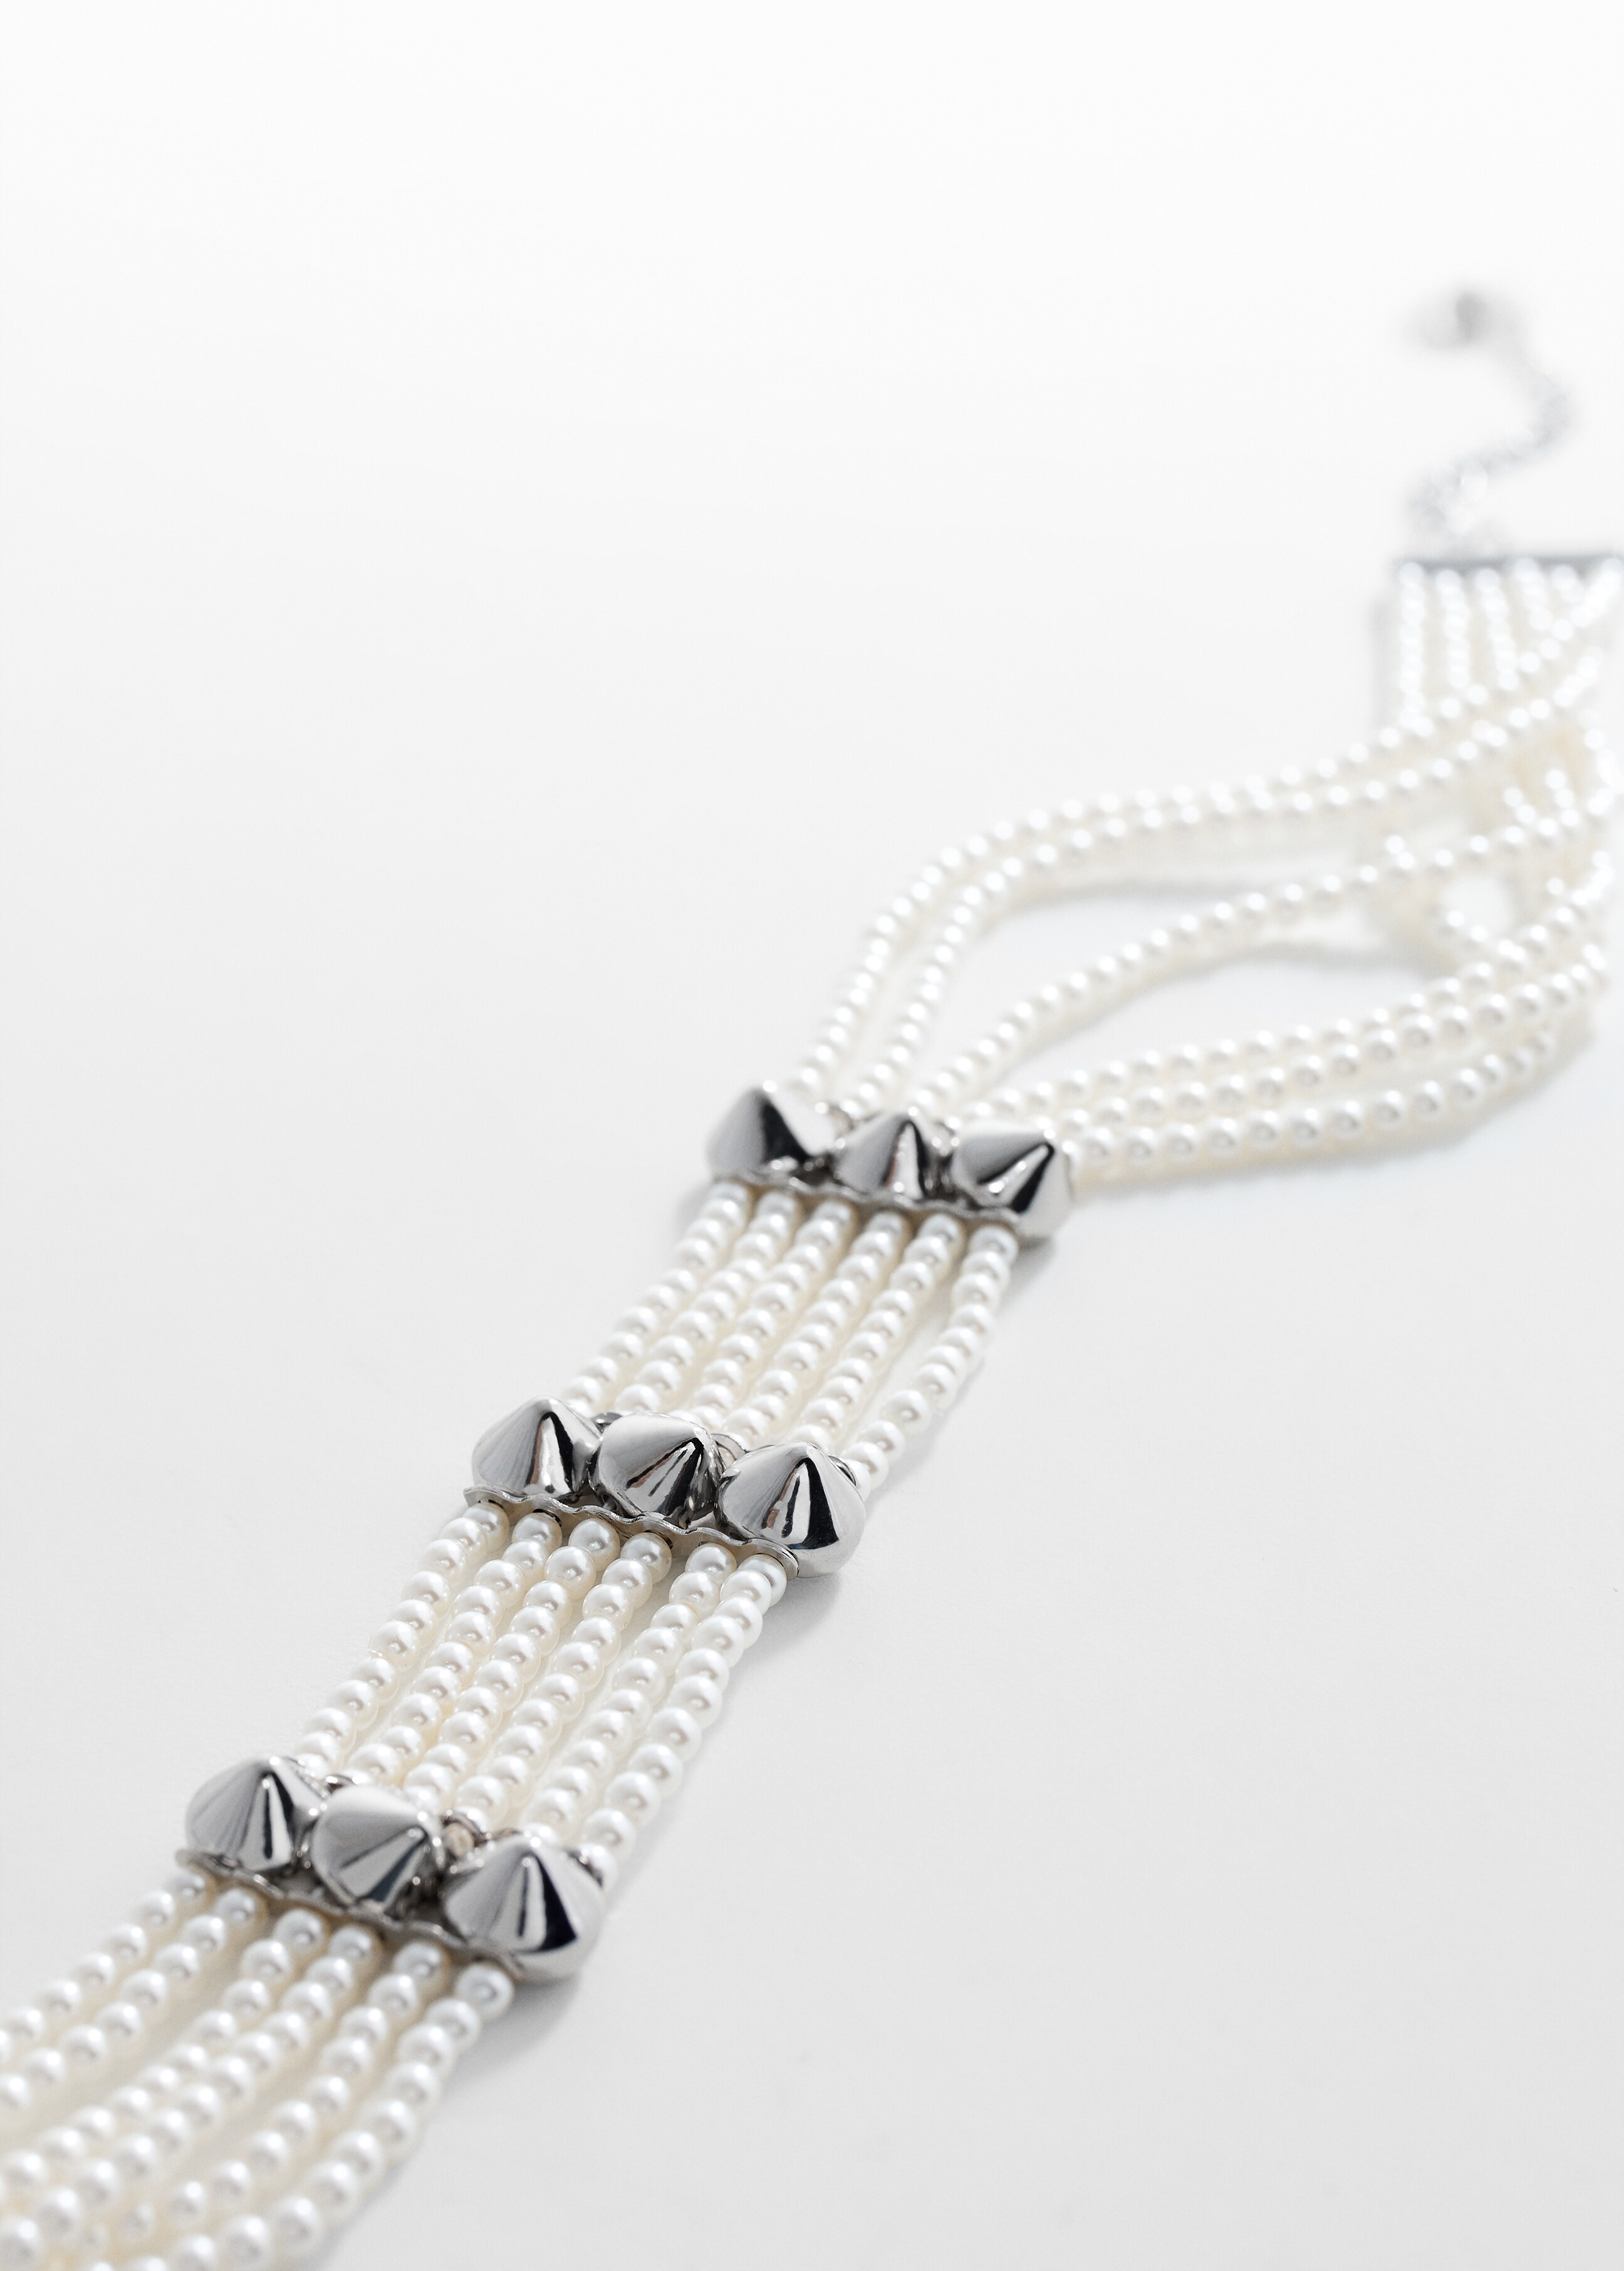 Pearl choker necklace - Medium plane